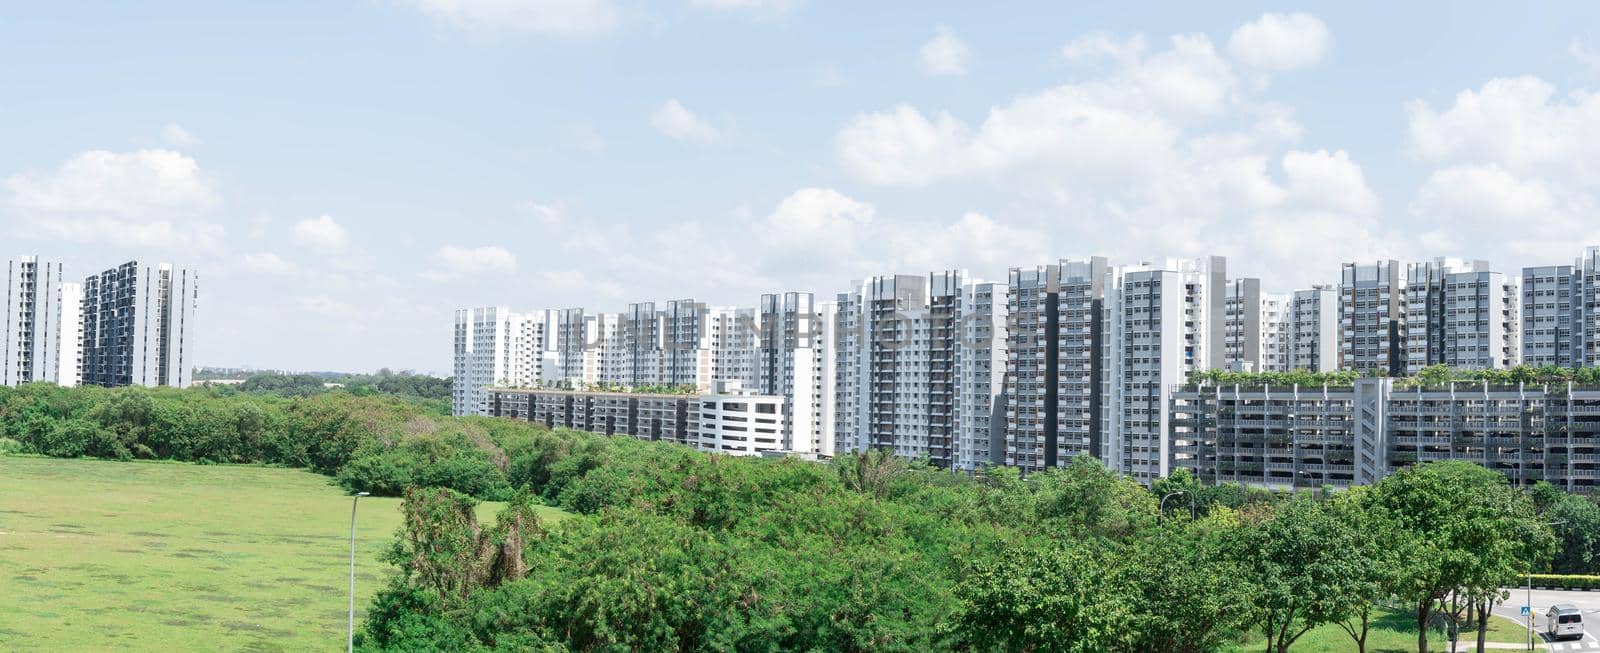 Panorama shot of HDB condominiums in Singapore by billroque